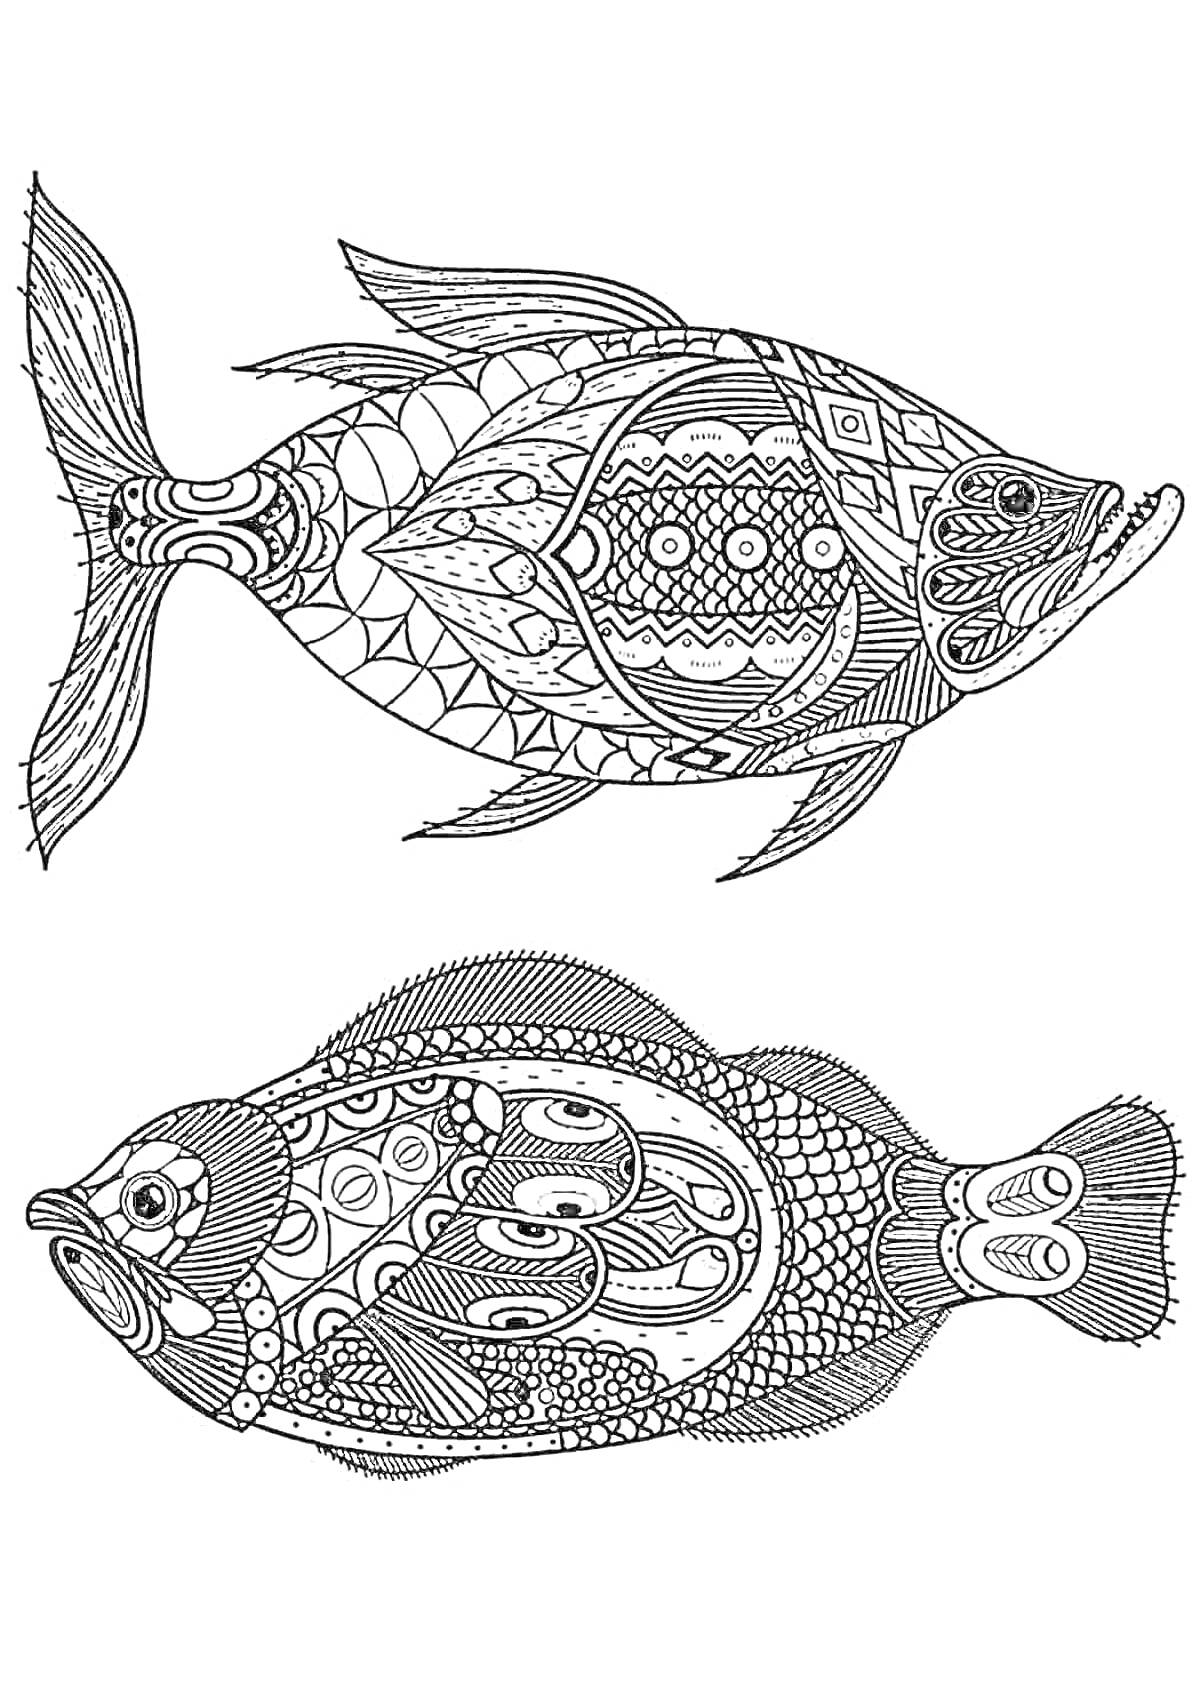 Раскраска Антистресс раскраска с двумя декоративными рыбами с узорами